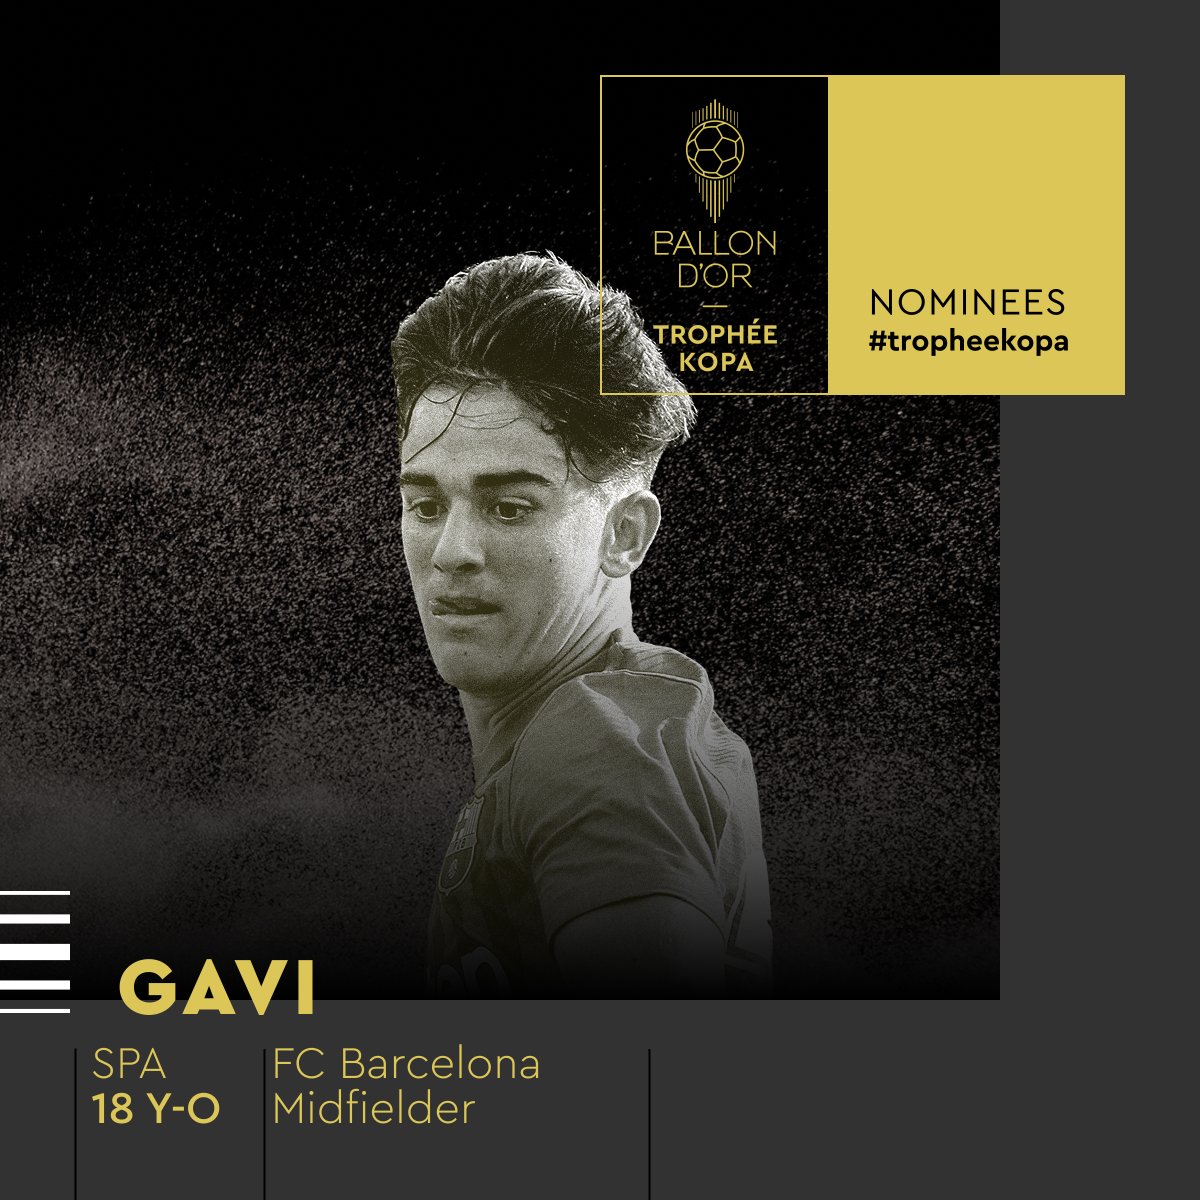 Nominated for the 2022 Kopa Trophy… ✨

Gavi
@FCBarcelona_es

#TropheeKopa #ballondor